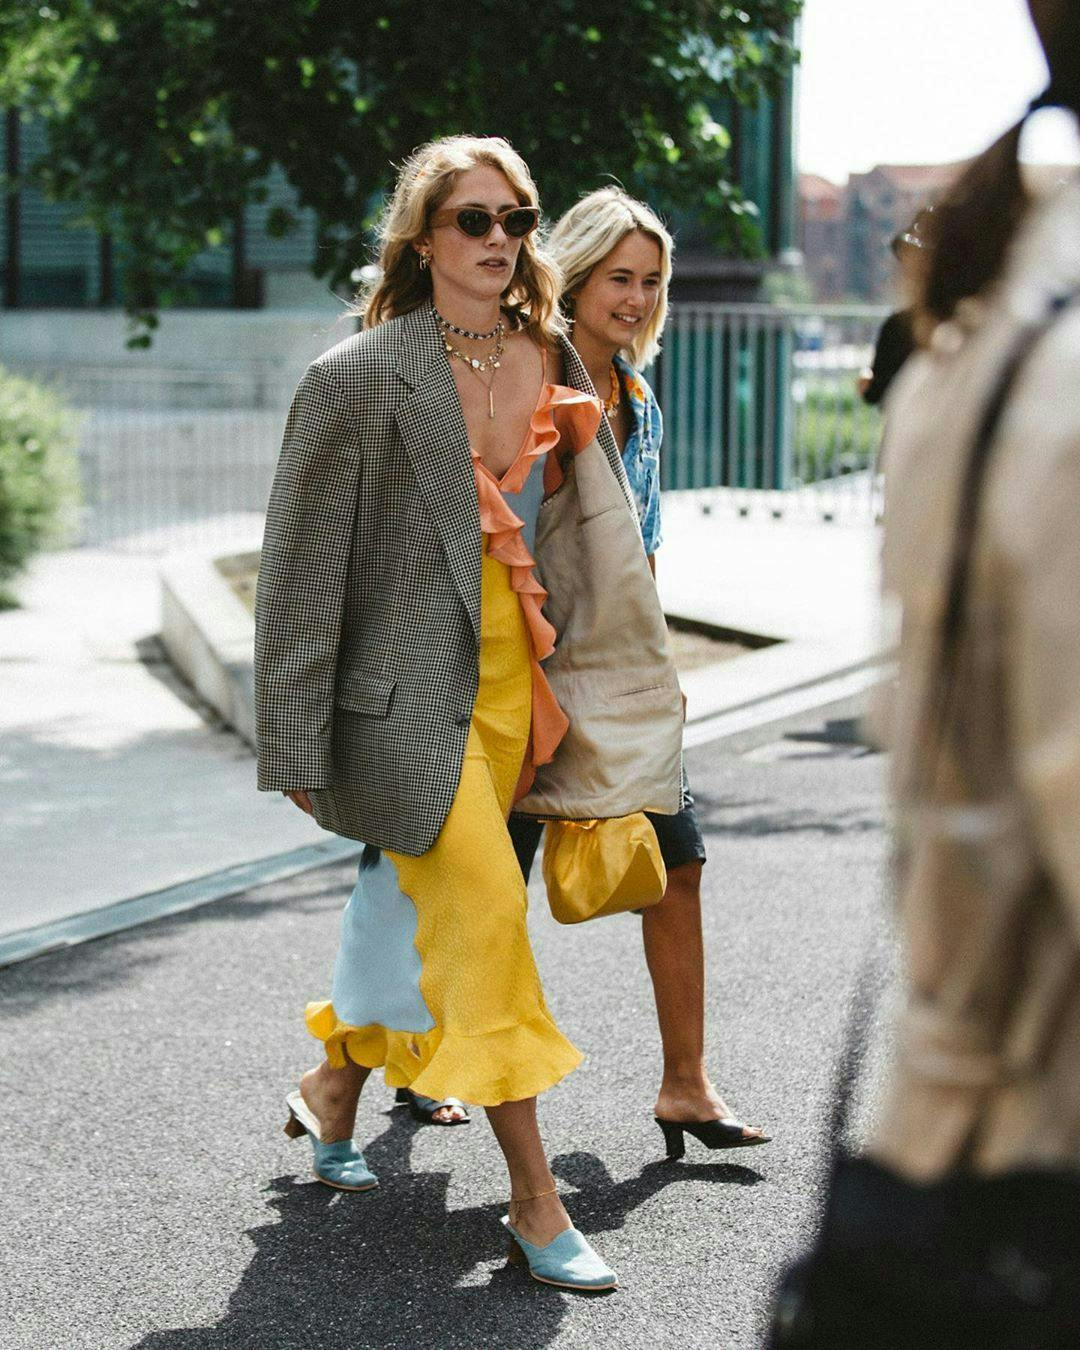 clothing apparel person sunglasses accessories road pedestrian shorts tarmac footwear